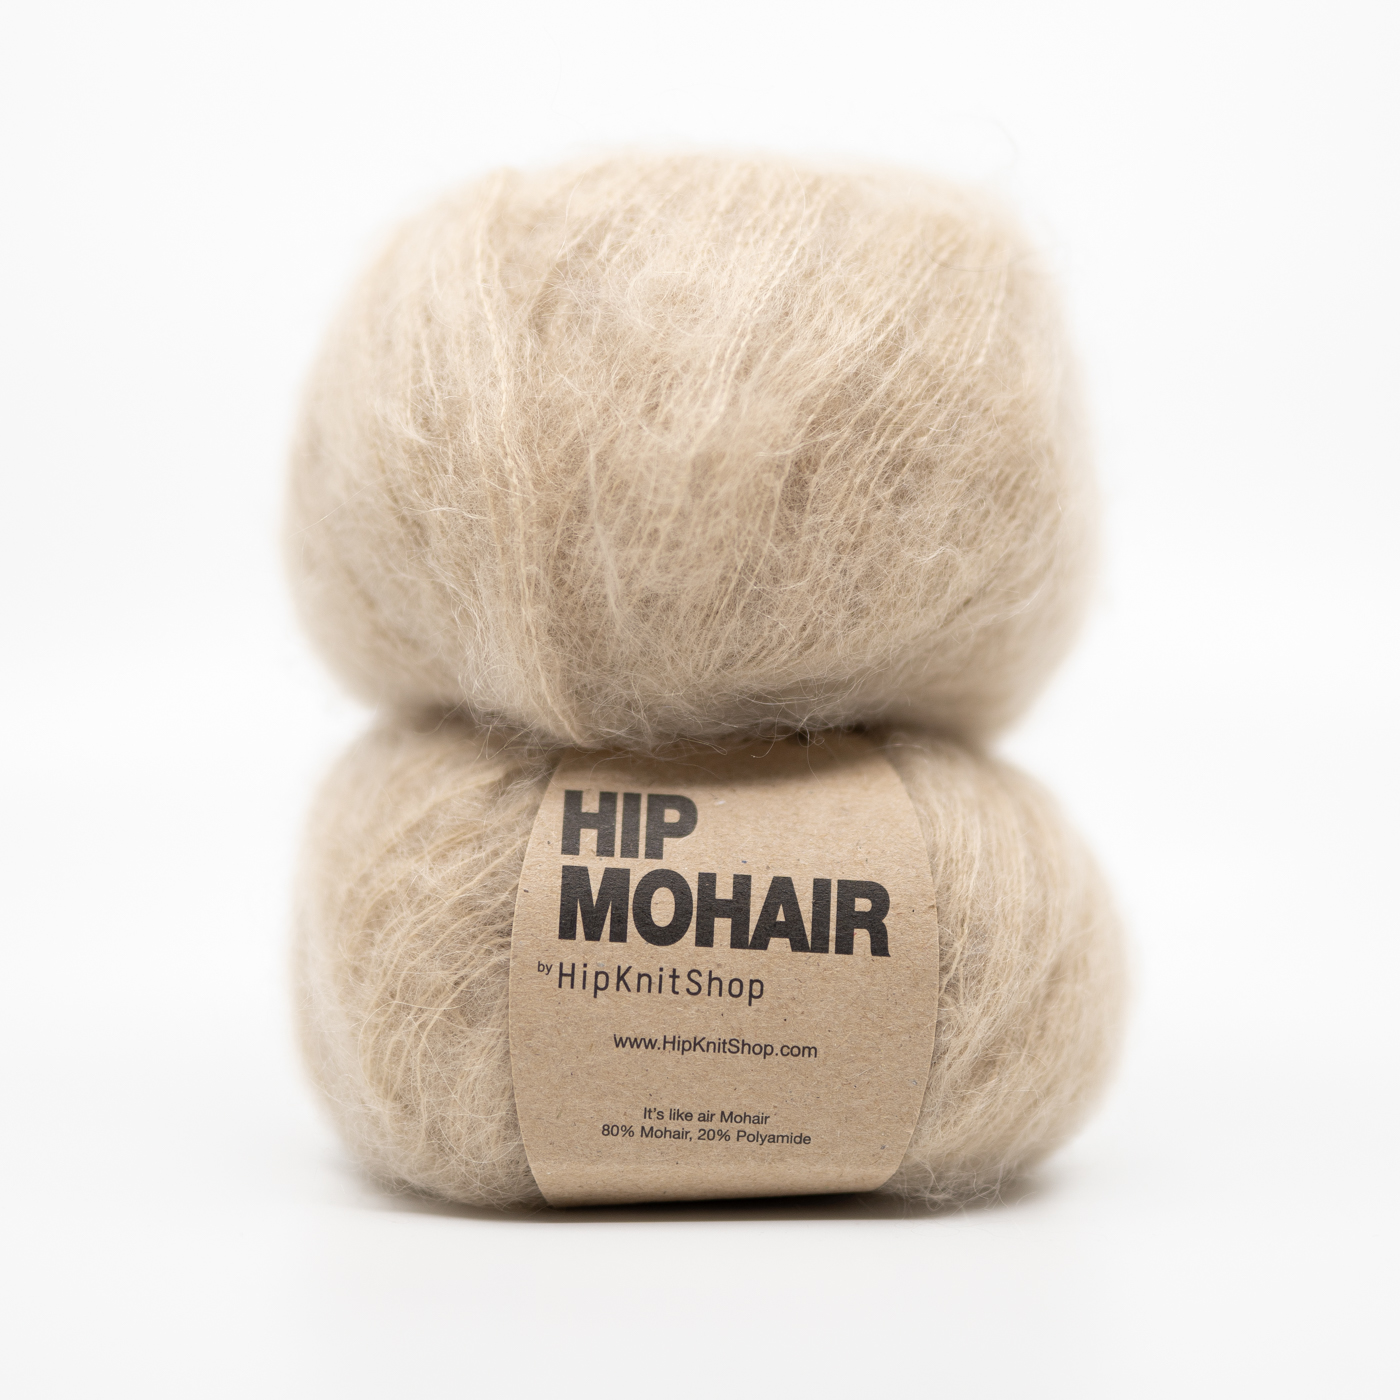  - Cappuccino mohair | Hip Mohair beige yarn - by HipKnitShop - 22/11/2019